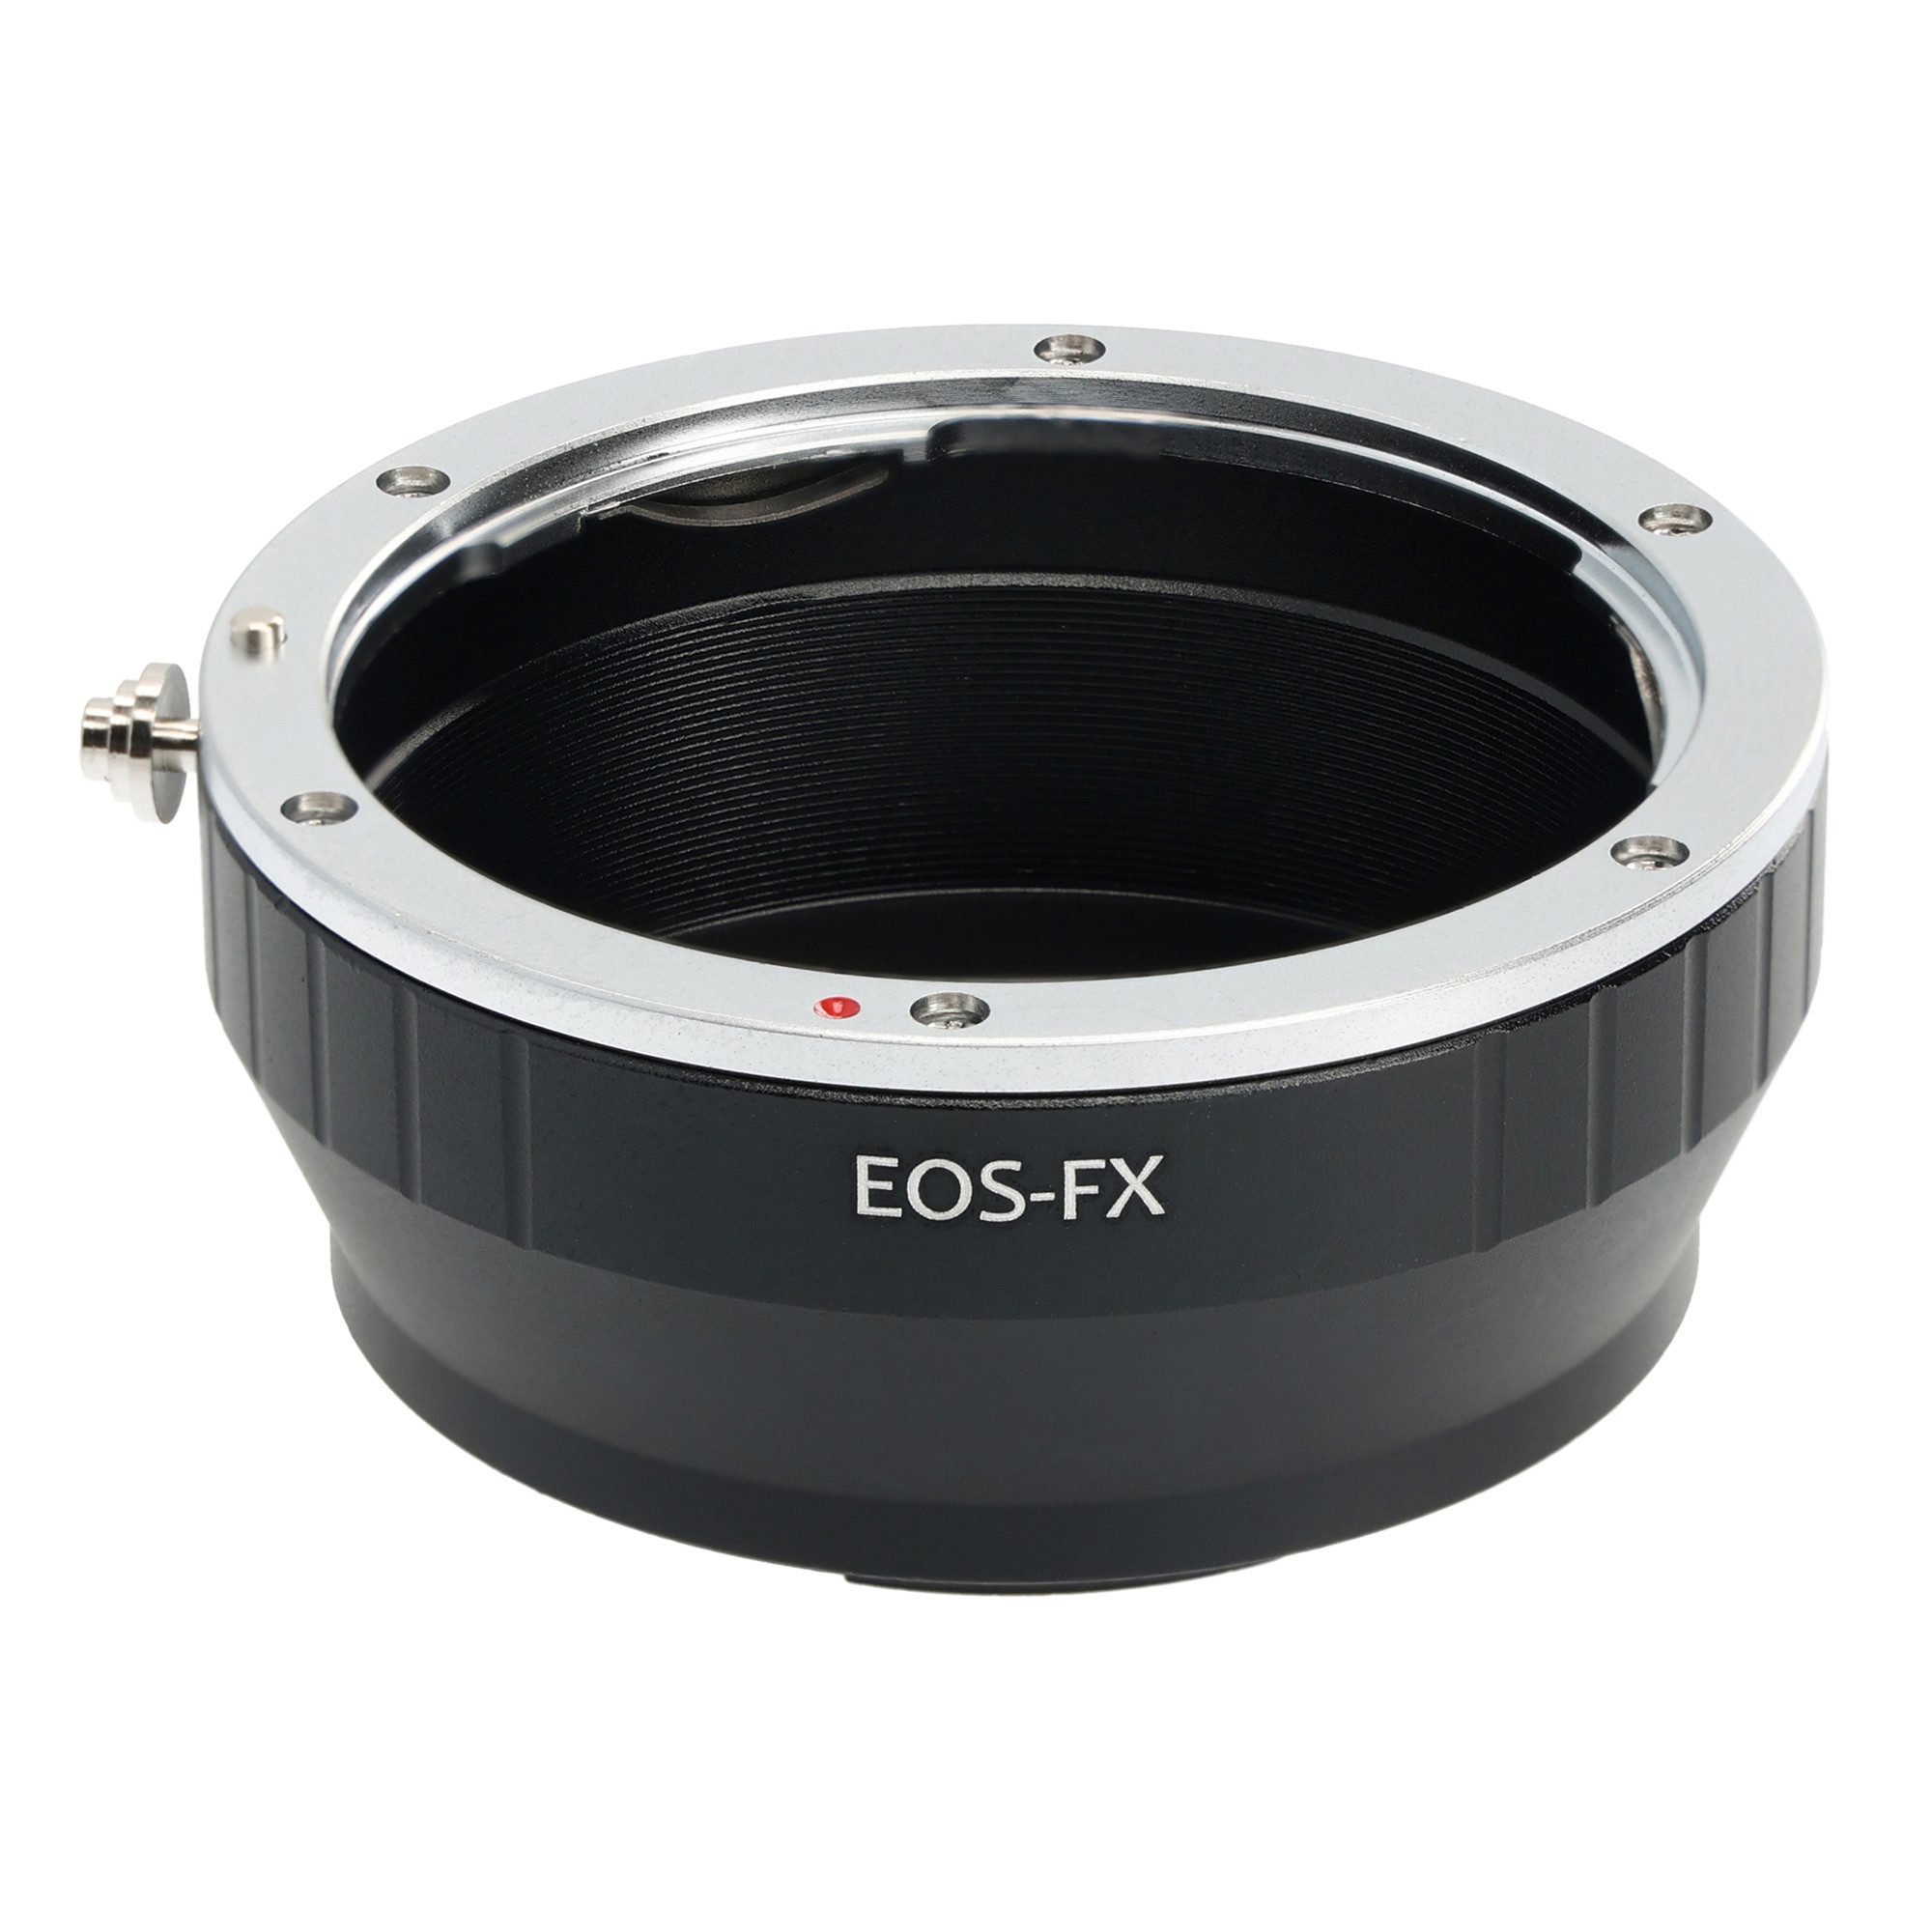 ayex Objektivadapter für EOS EF/EFS an Fuji FX Mount Objektiv-Adapter